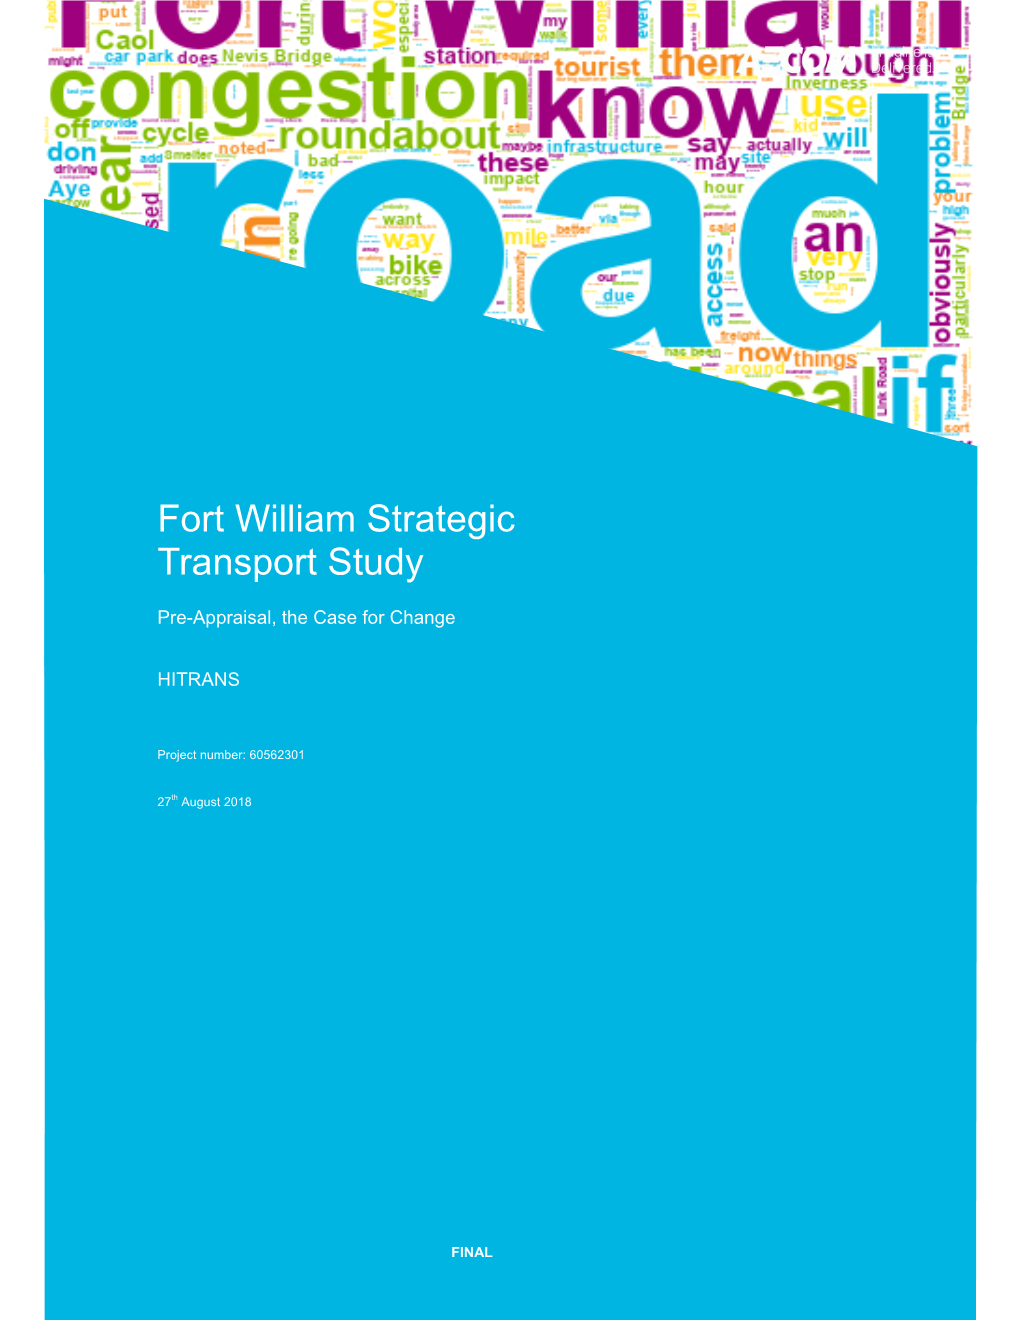 Fort William Strategic Transport Study